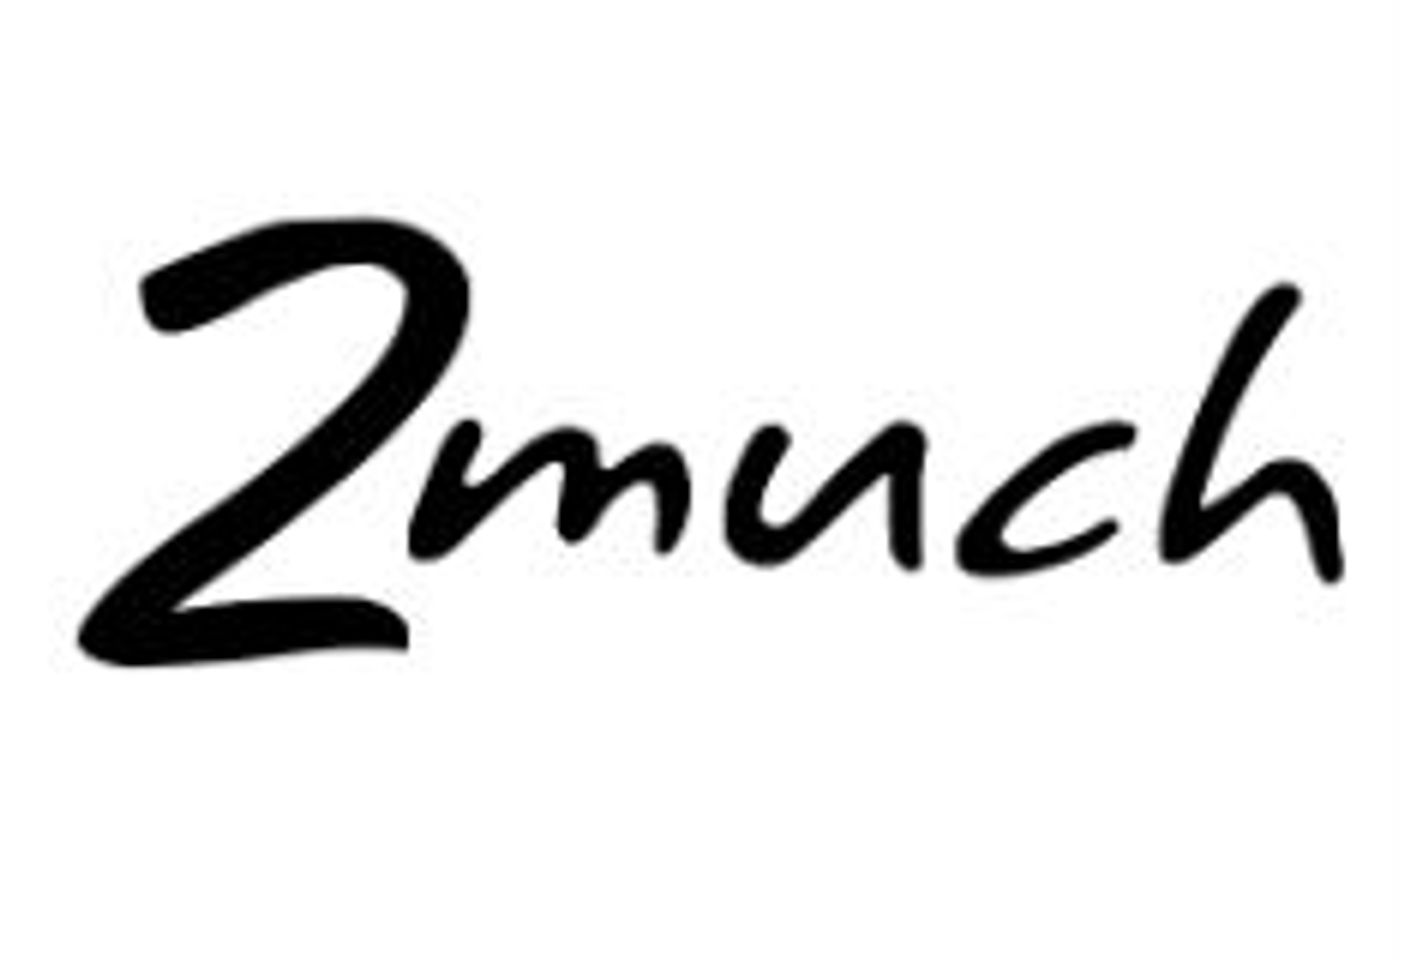 2much.net Praises Qwebec Expo